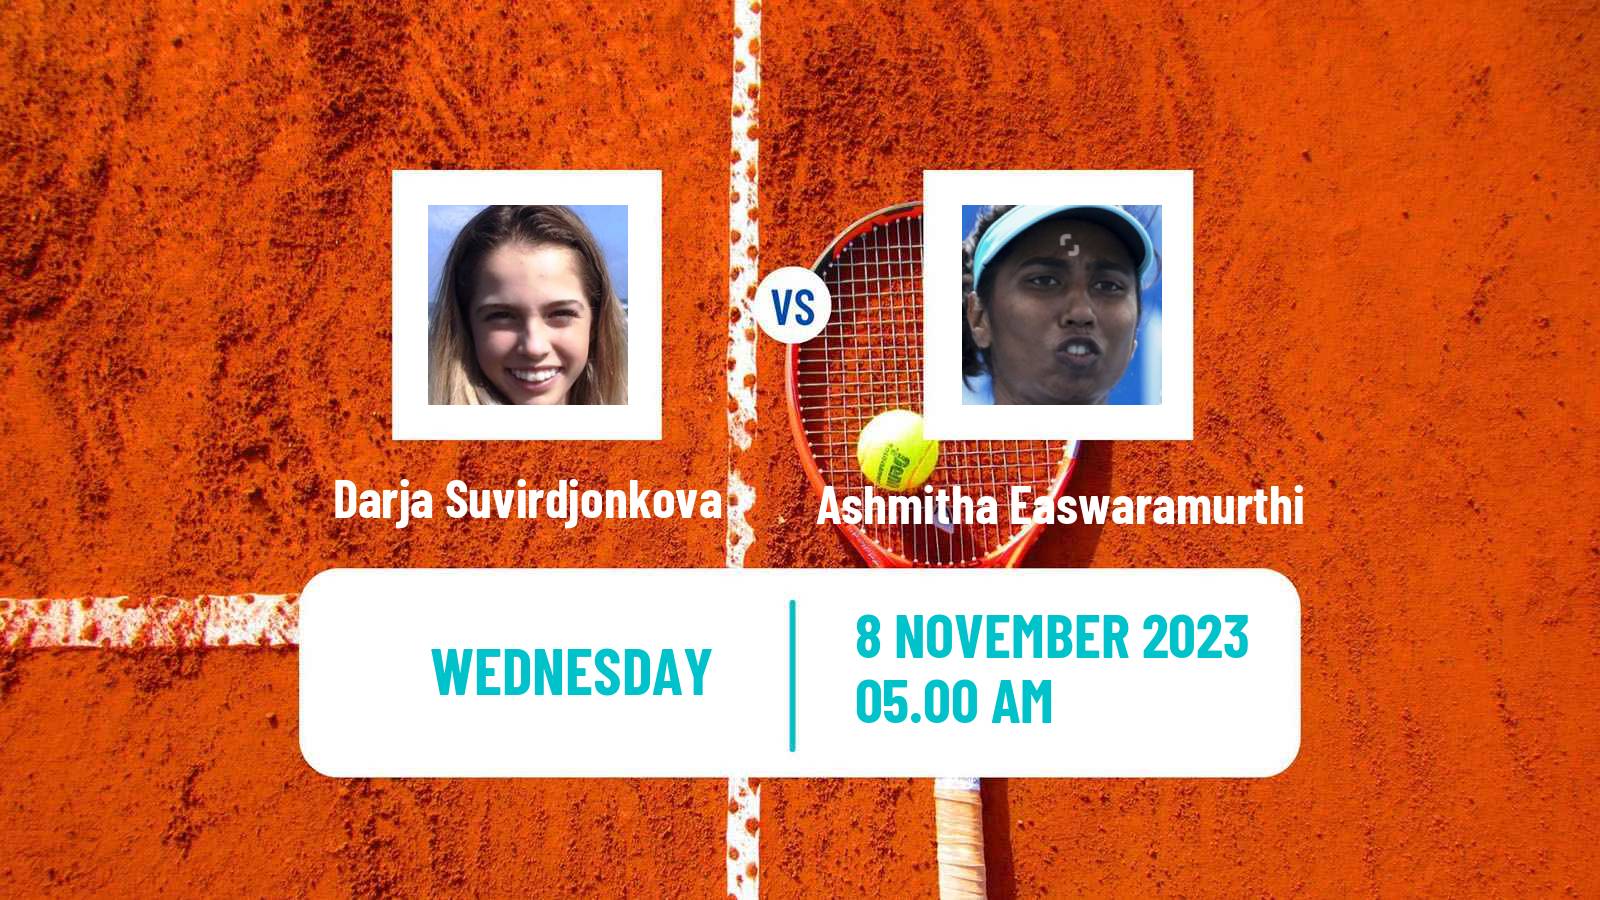 Tennis ITF W15 Sharm Elsheikh 23 Women Darja Suvirdjonkova - Ashmitha Easwaramurthi